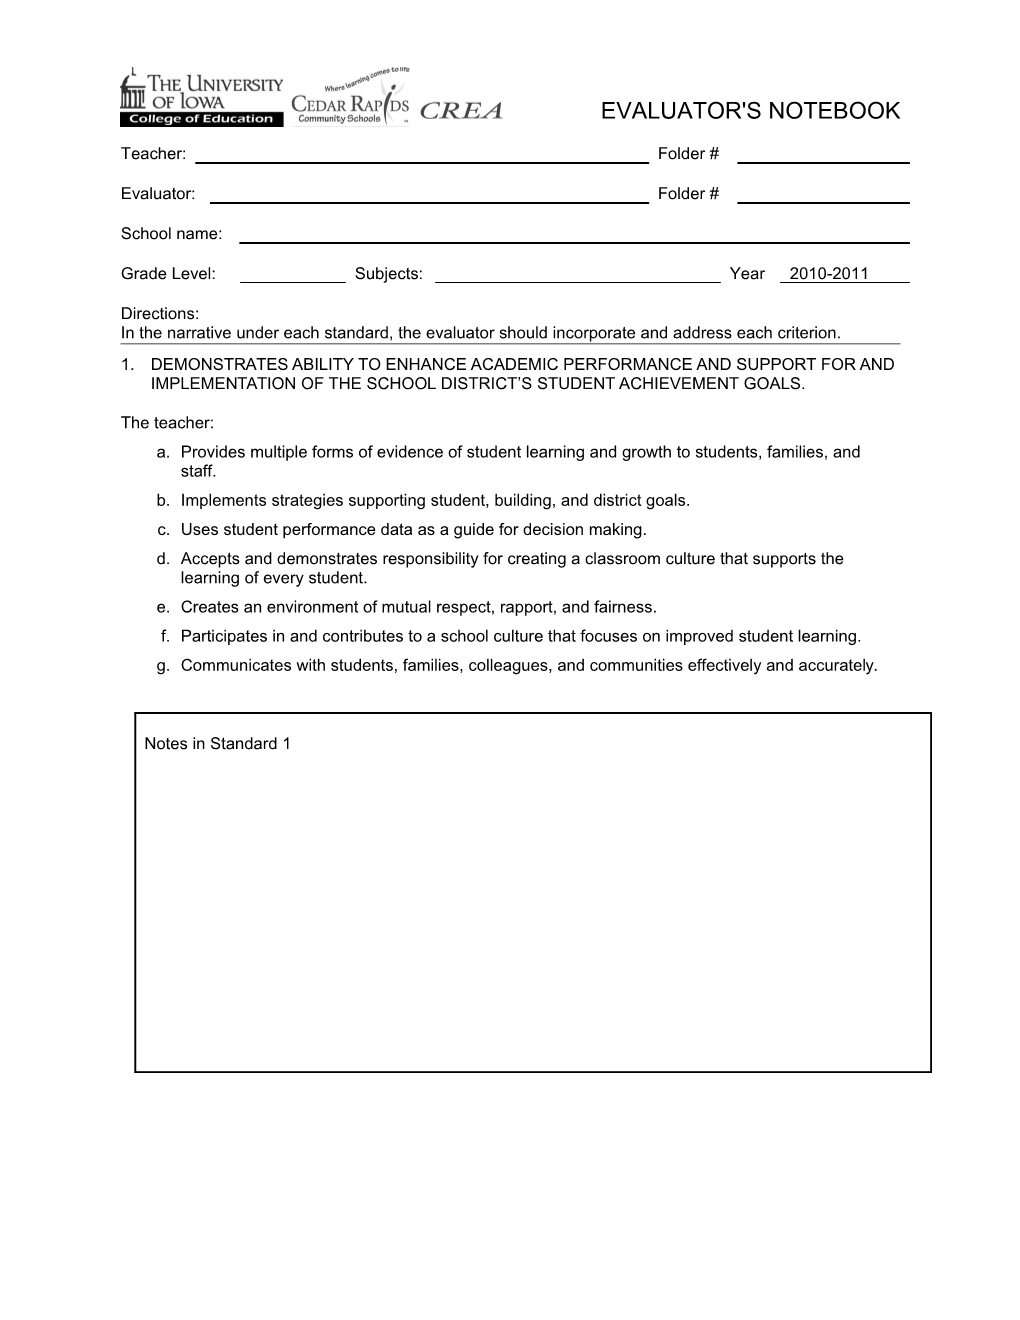 Summative Evaluation Form